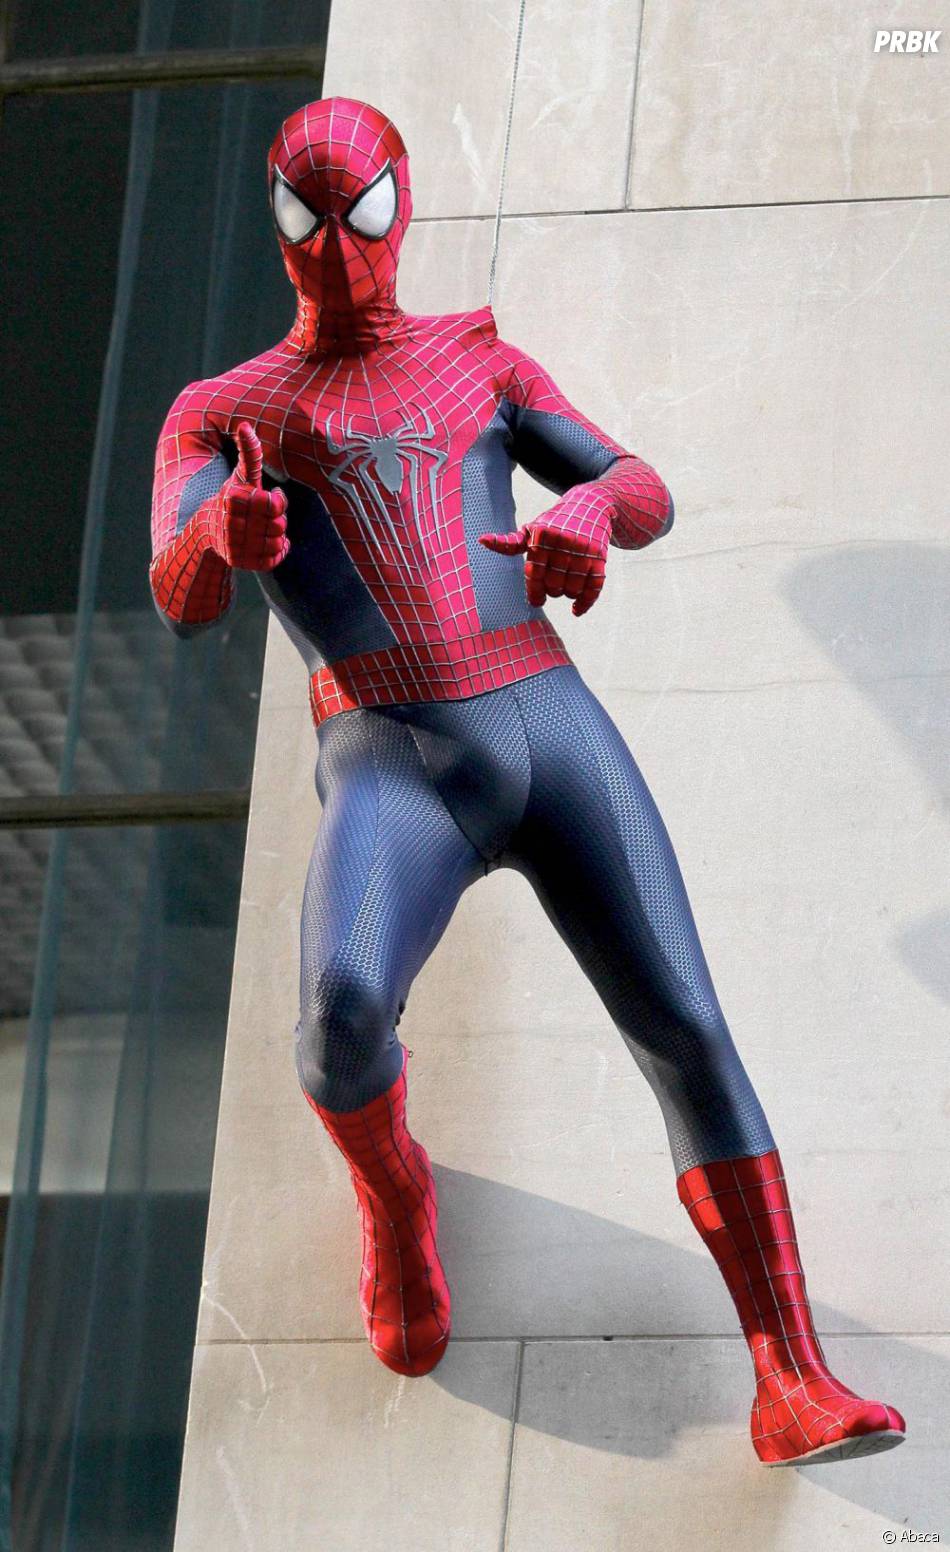 The Amazing Spider Man 2 Indowebster Indonesia